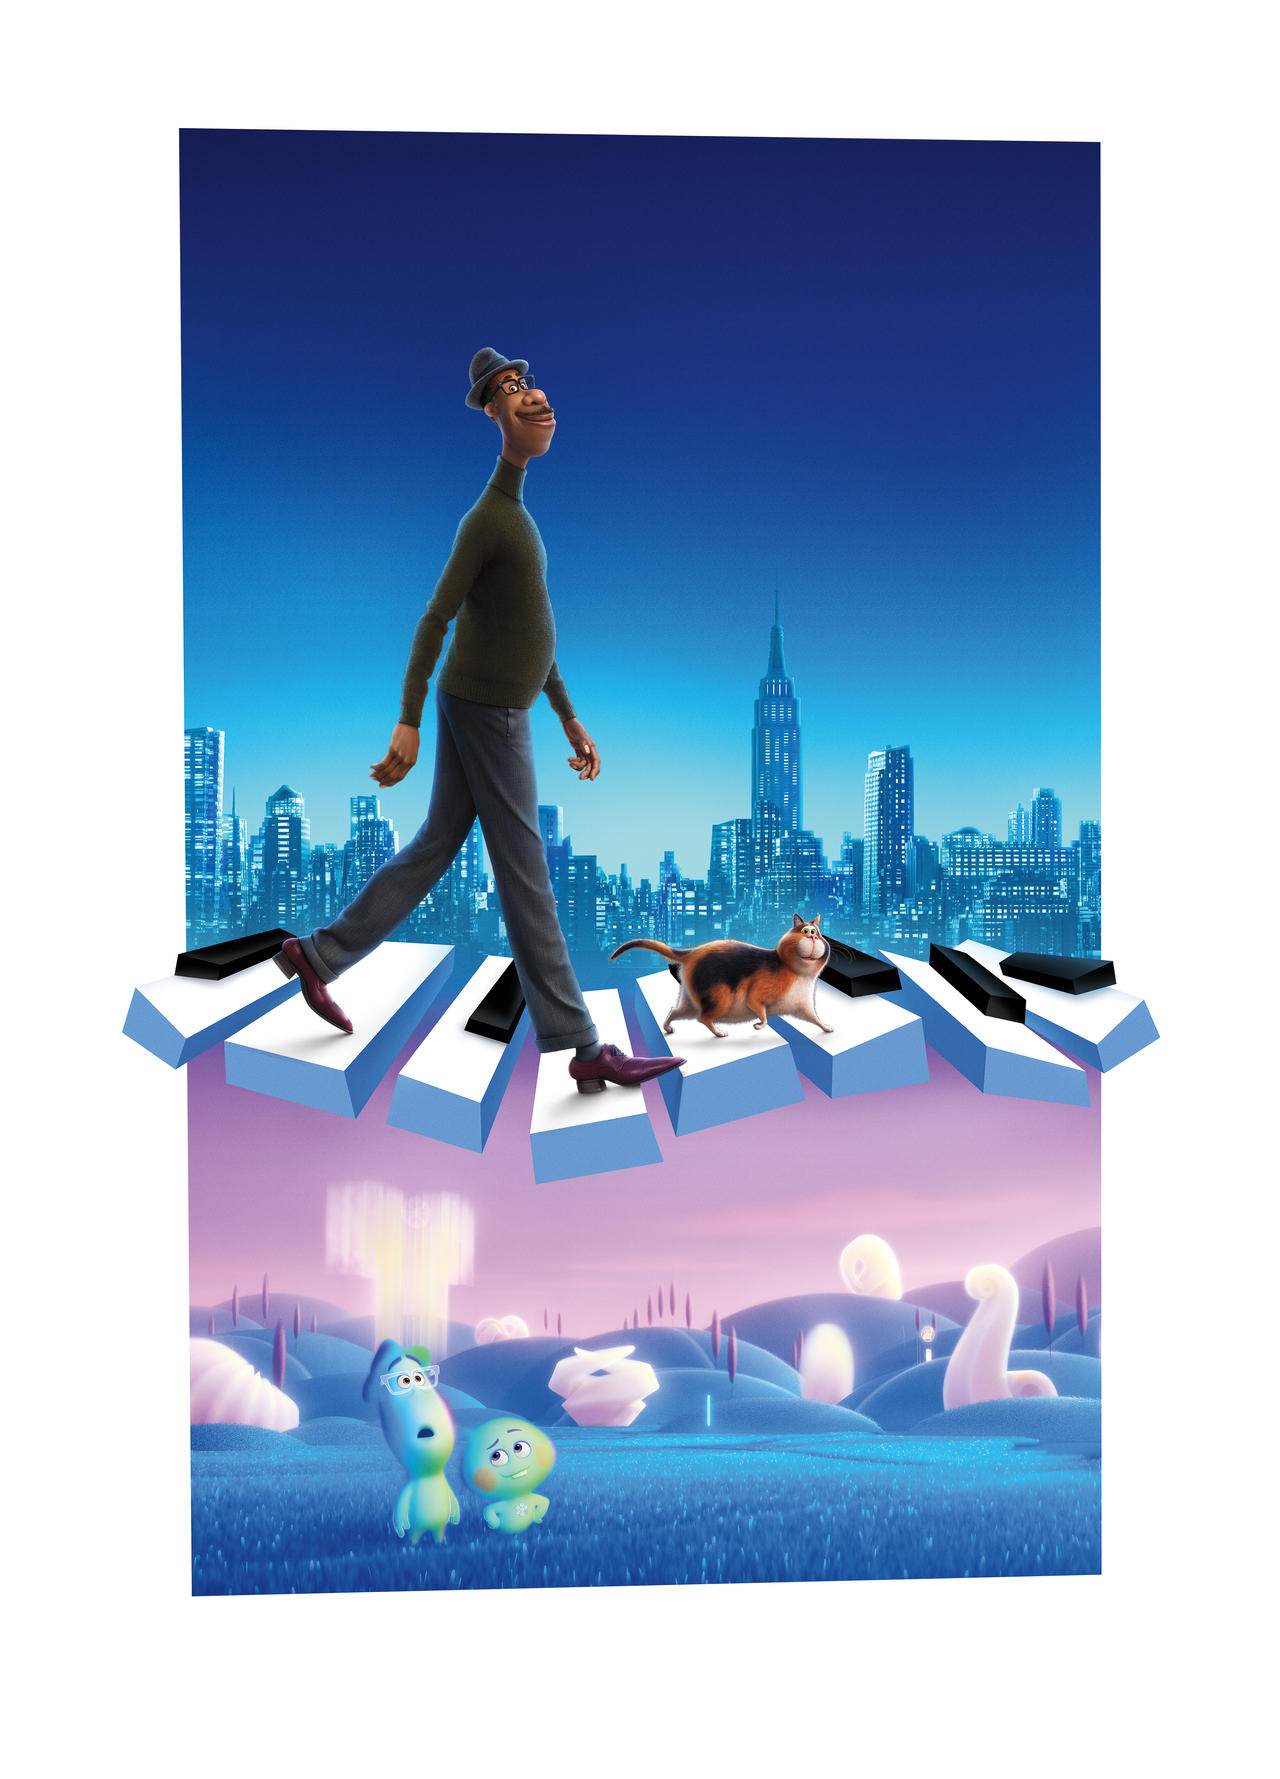 Disney_Pixar's Soul (2020) poster textless by mintmovi3 on DeviantArt